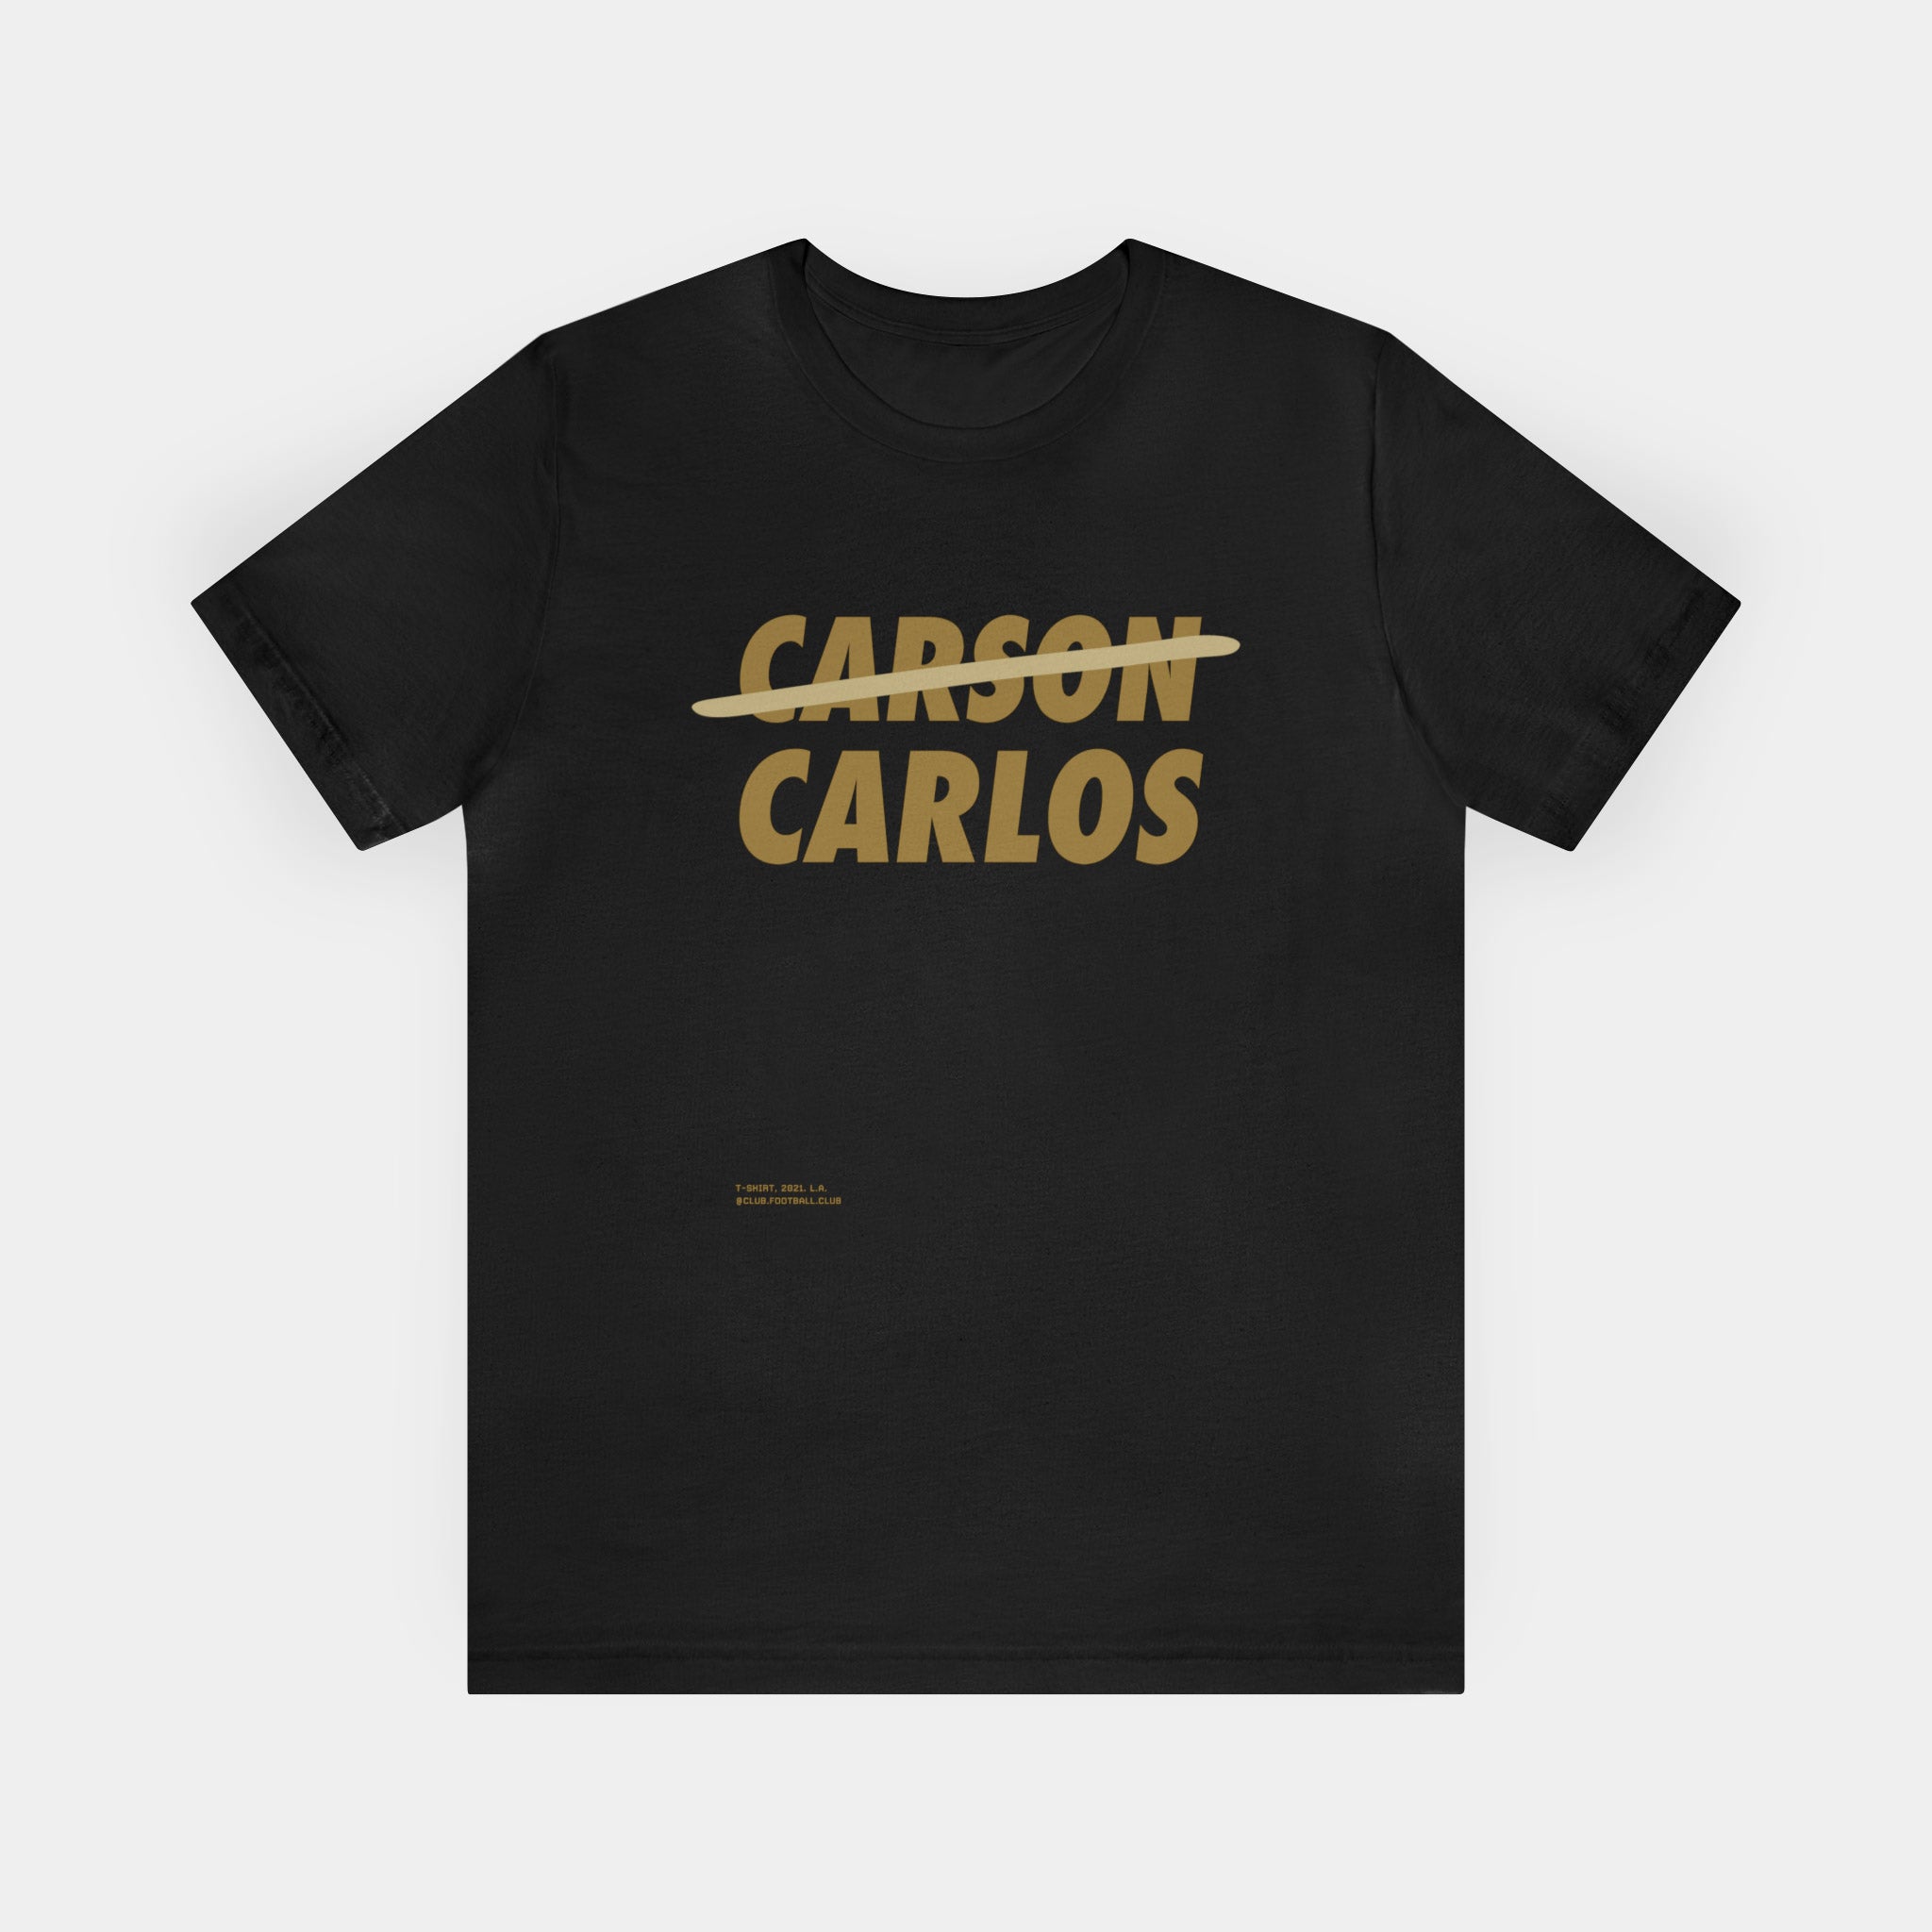 Carlos, Not Carson (LAFC) T-shirt